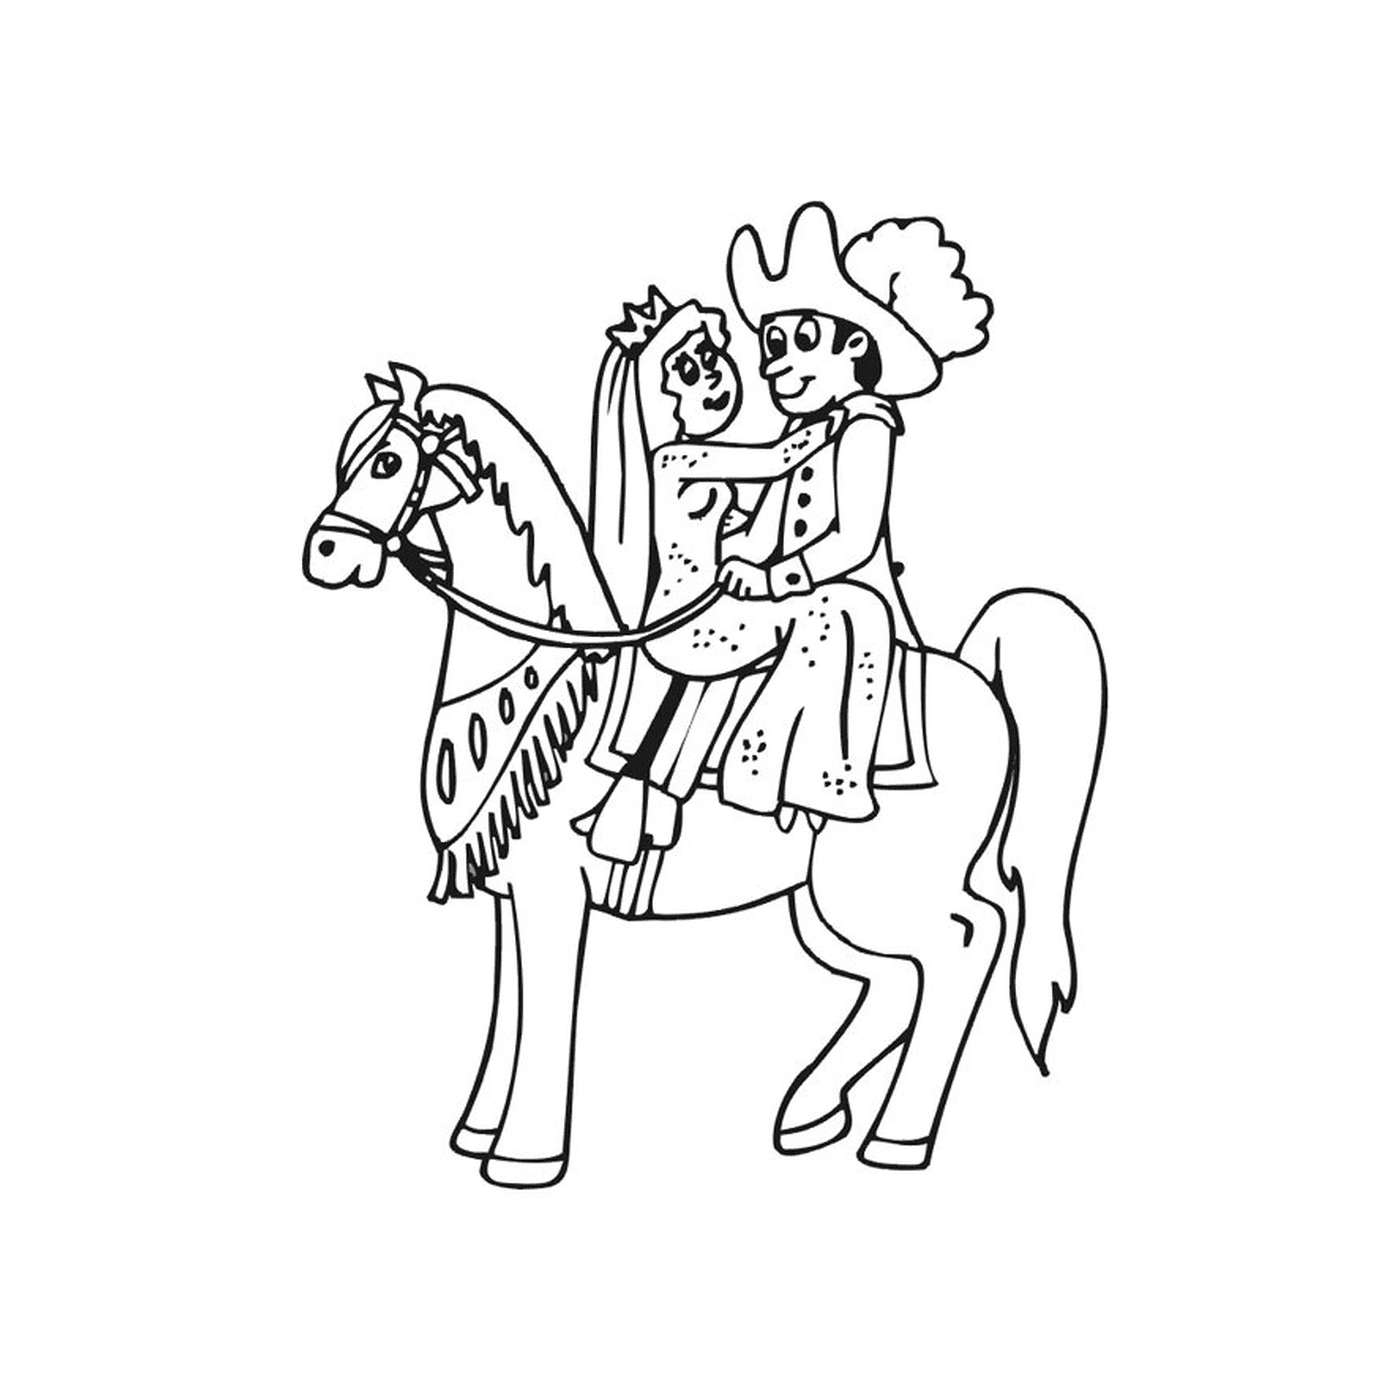  Princess Horse - A man sitting on a brown horse 